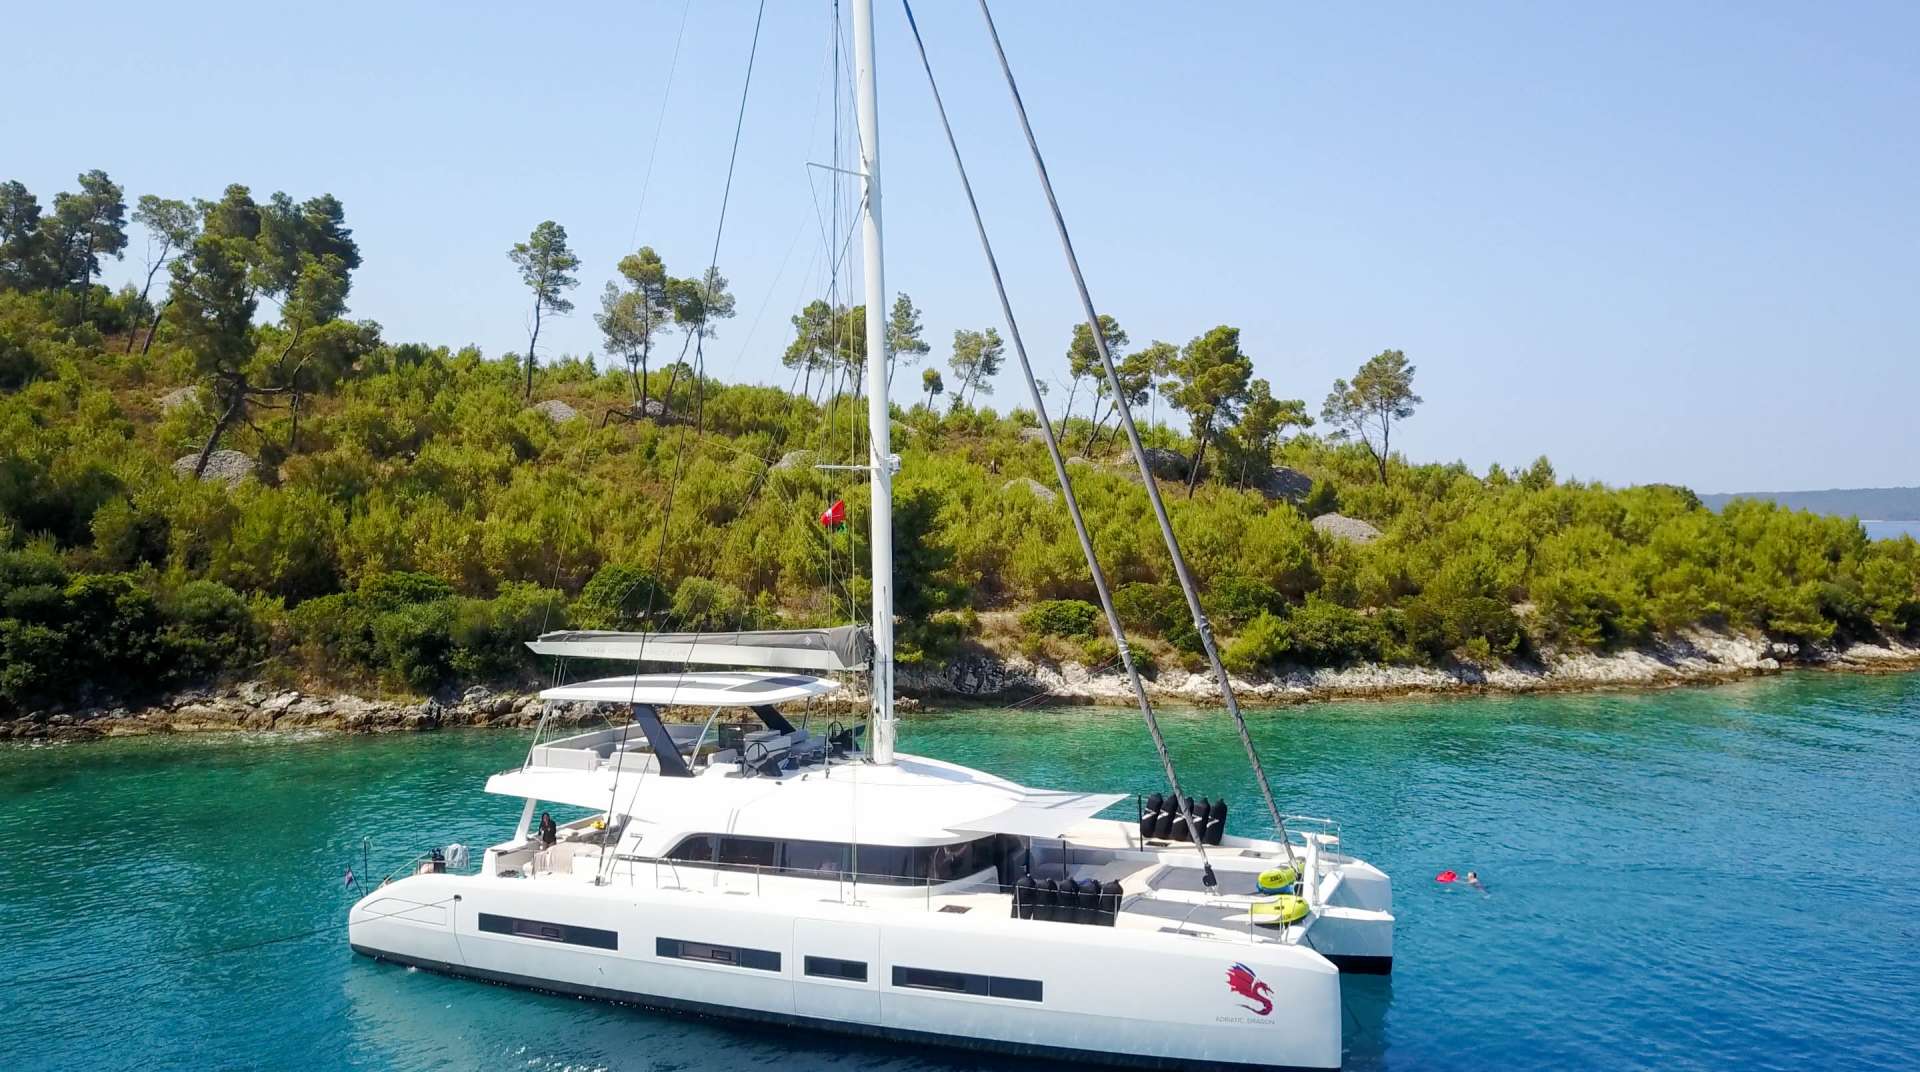 adriatic dragon (lagoon 77) - Yacht Charter Kraljevica & Boat hire in Croatia 1